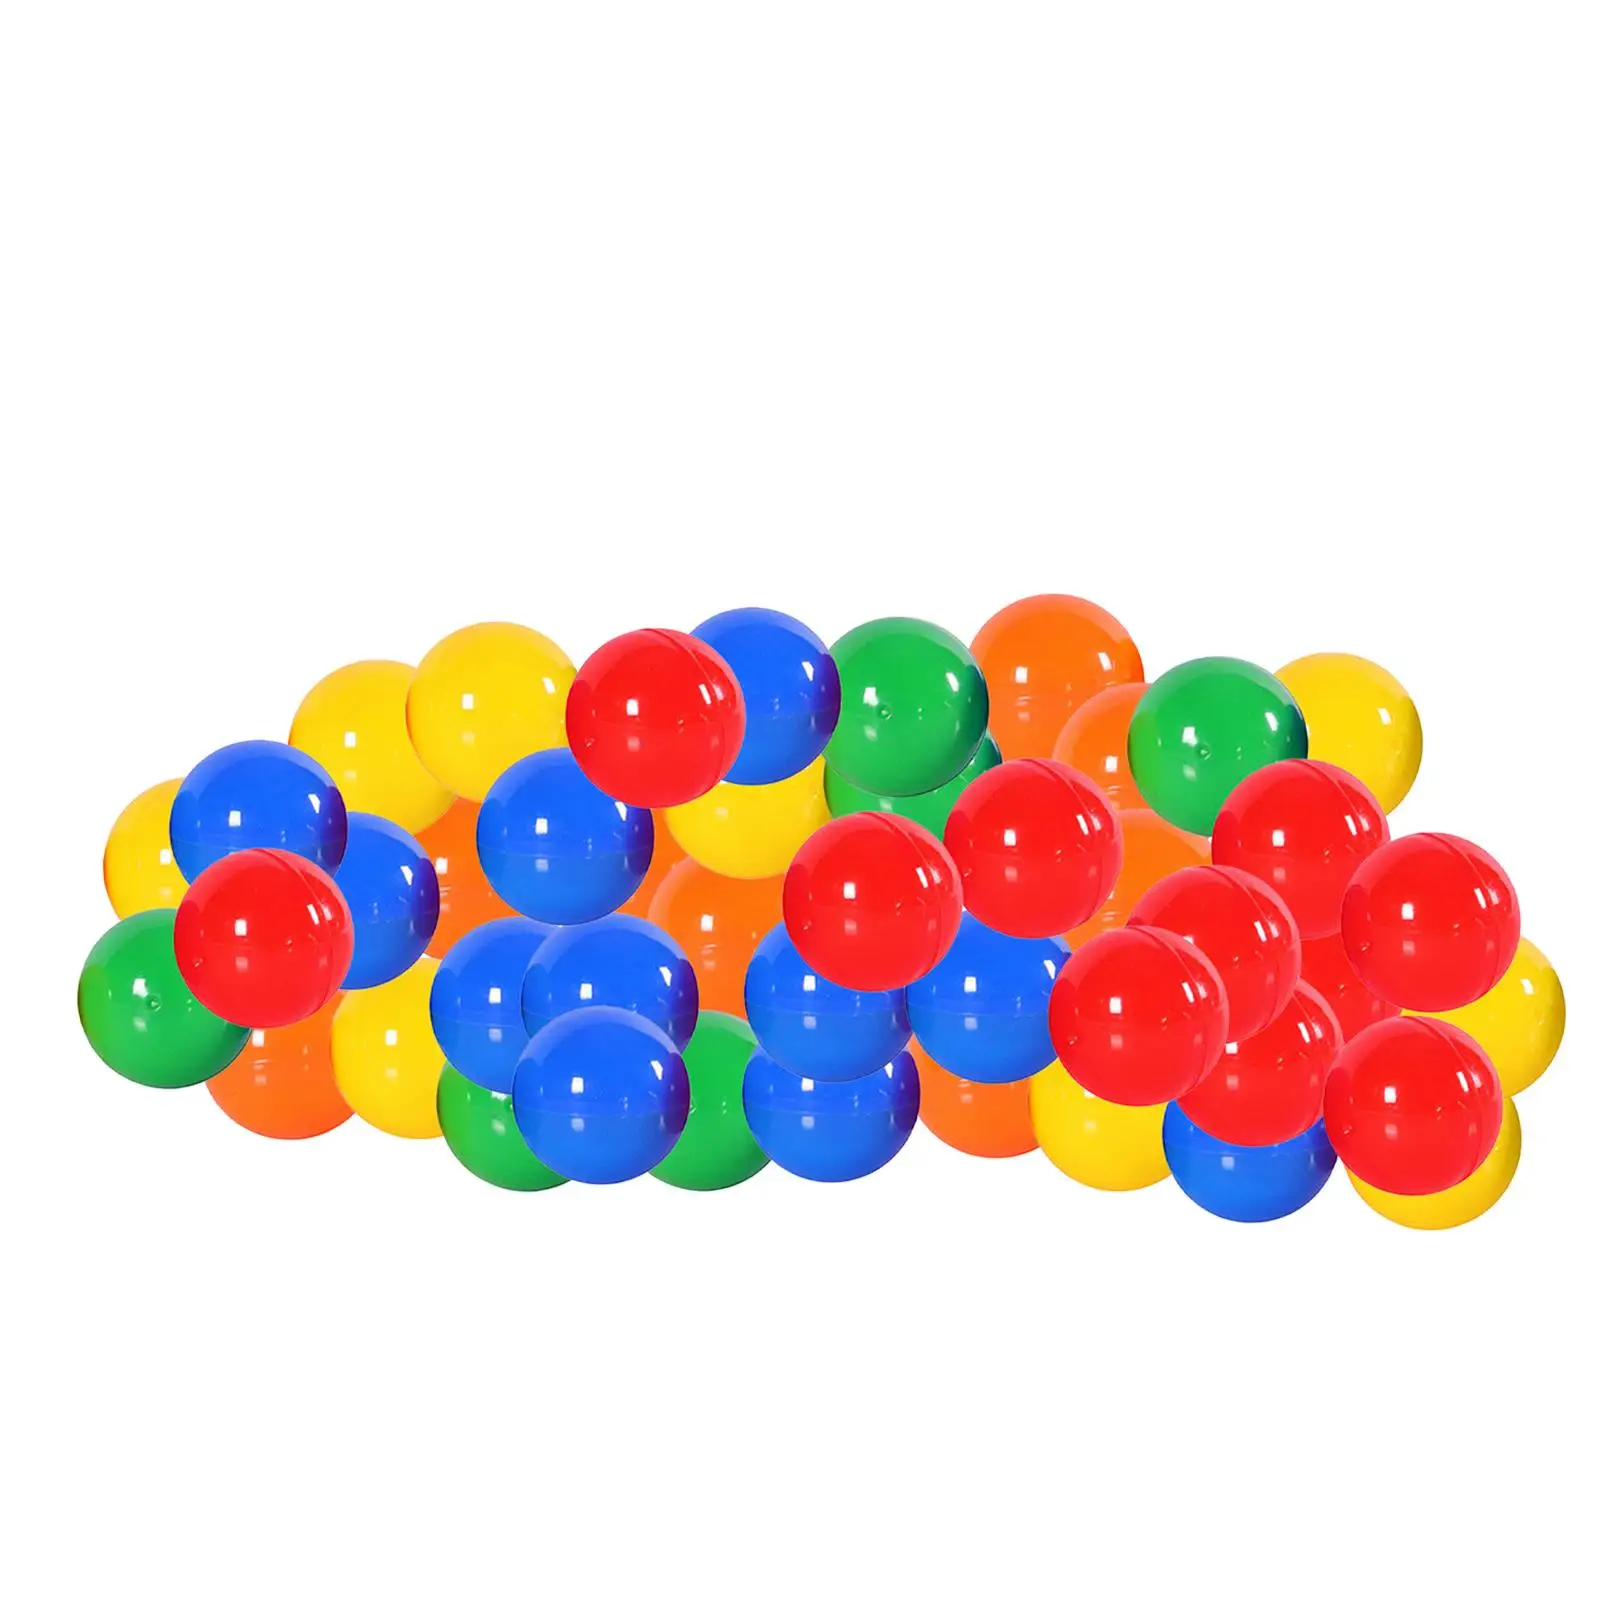 50x Bingo Ball Raffle Balls Portable Replace Accs Tally Ball Lottery Balls for